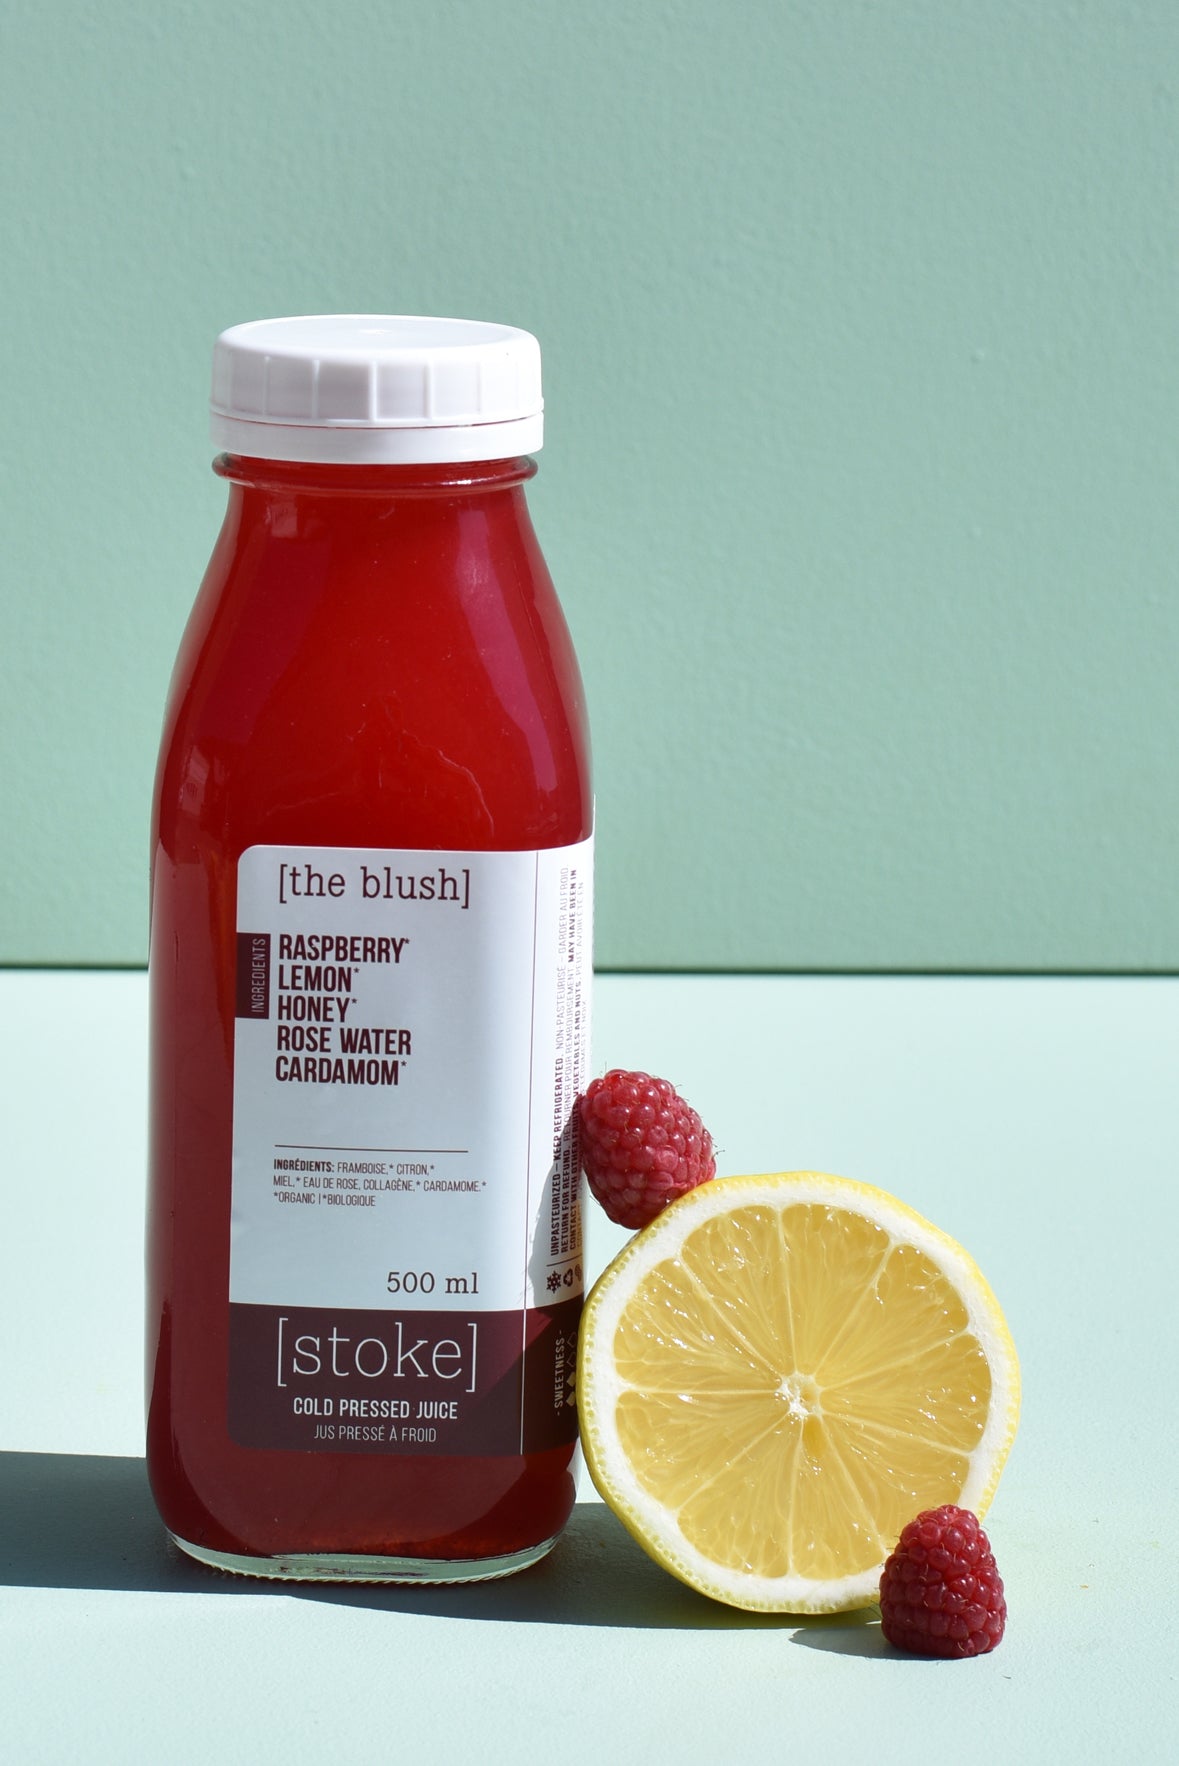 stoke cold pressed juice - organic juice - the blush